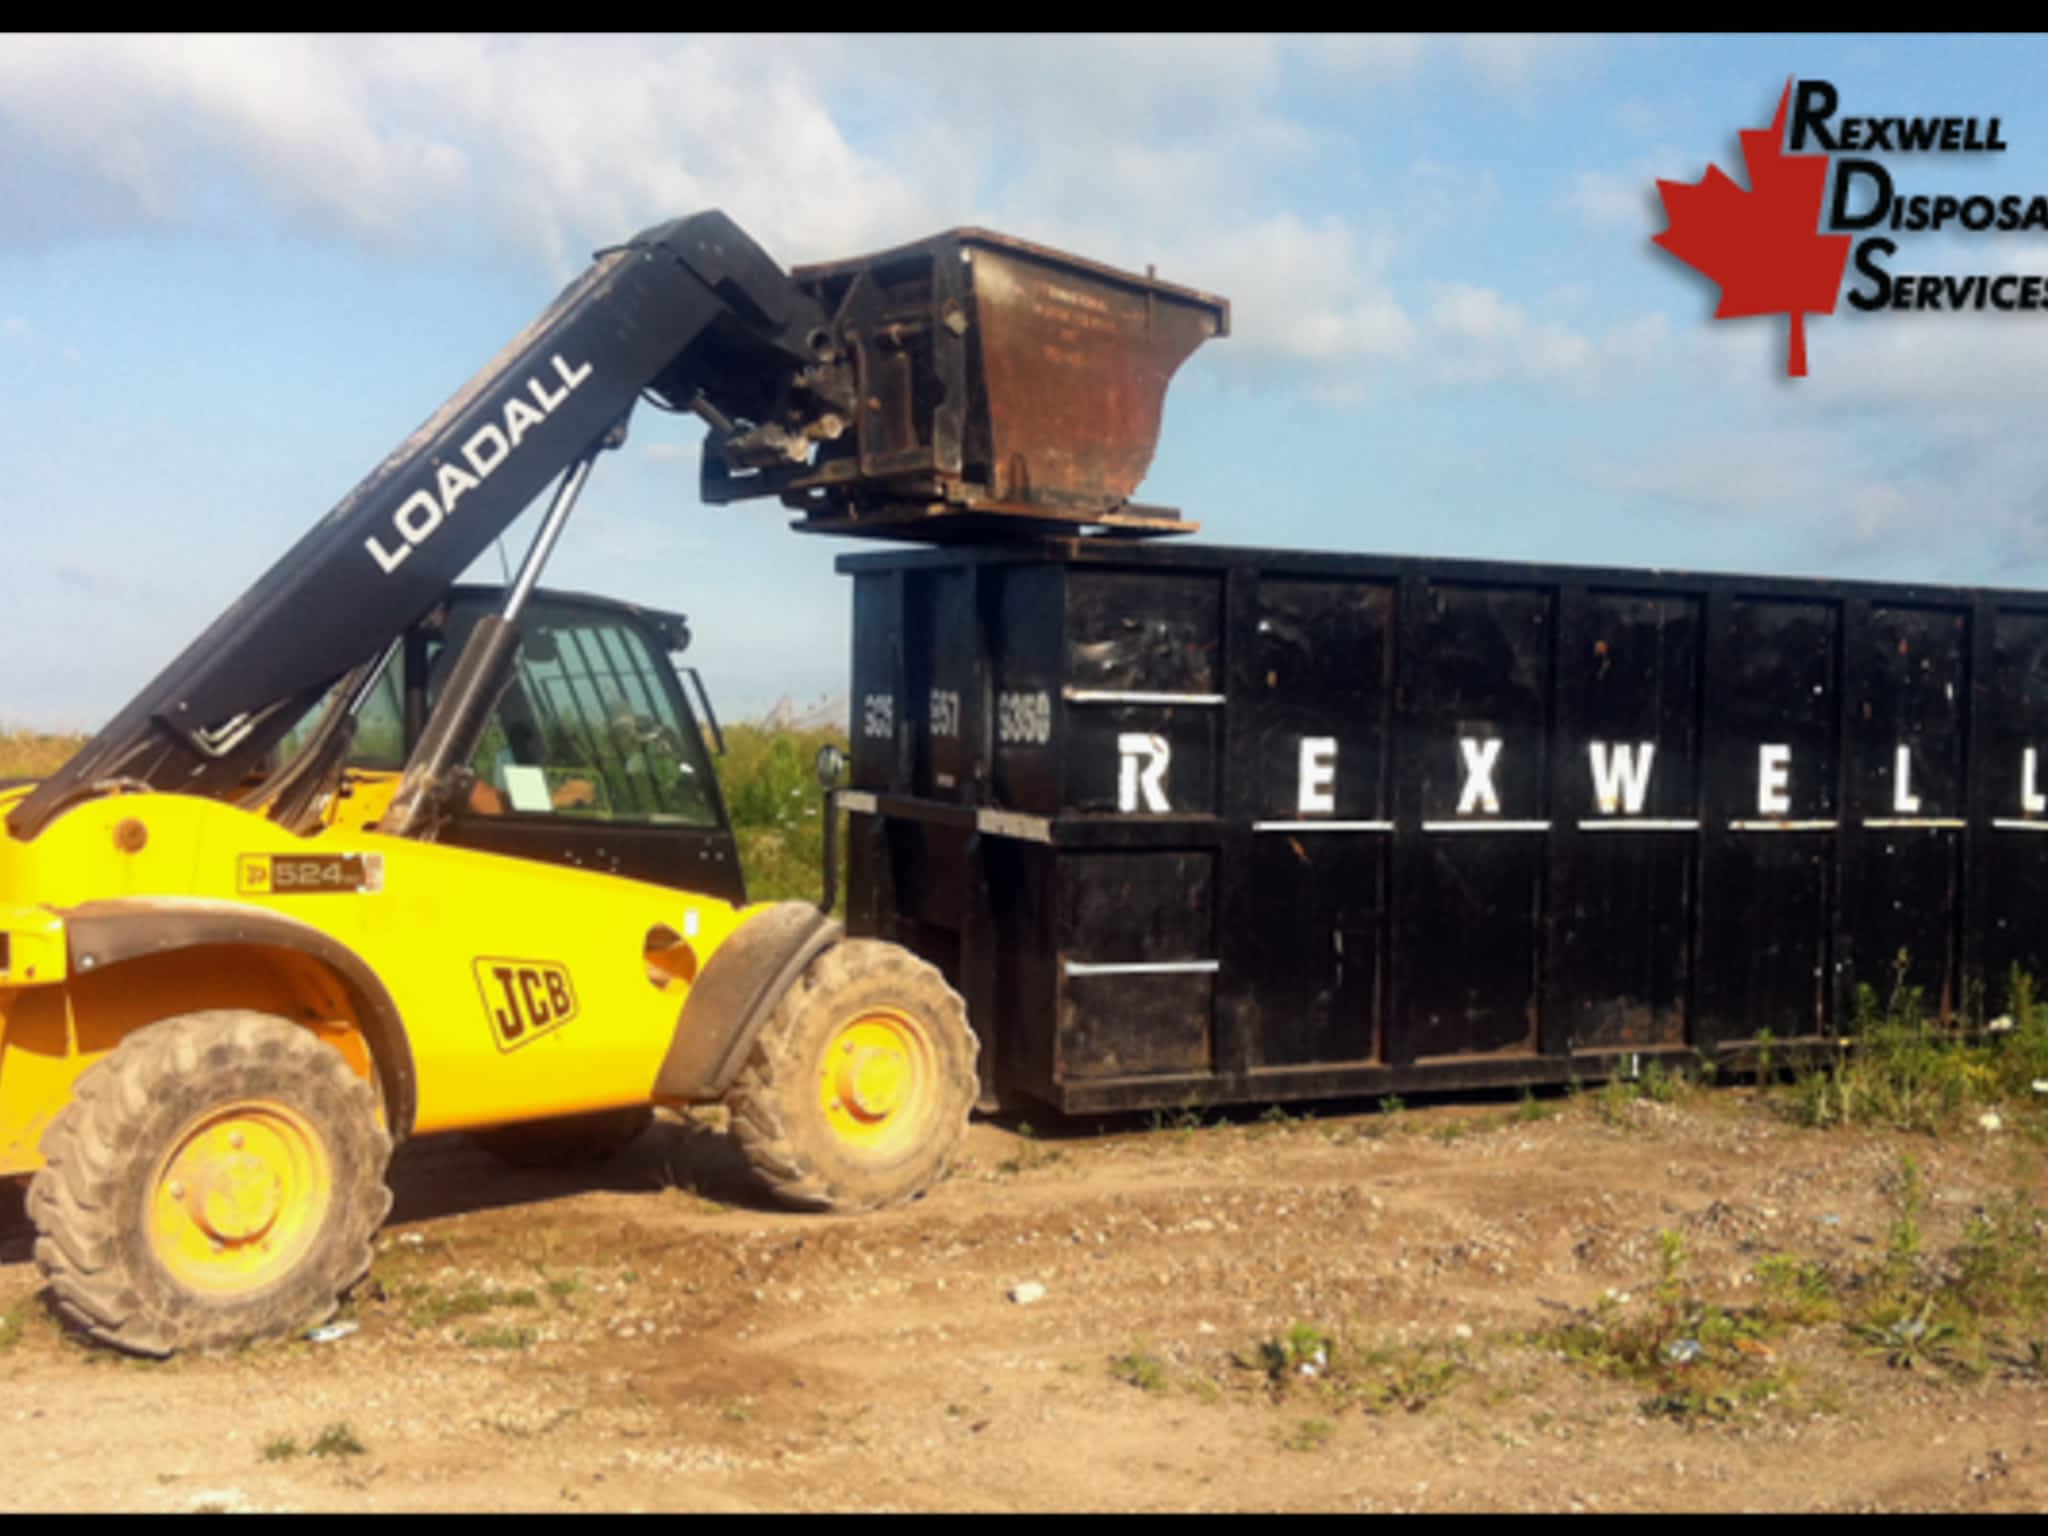 photo Rexwell Disposal Services Ltd